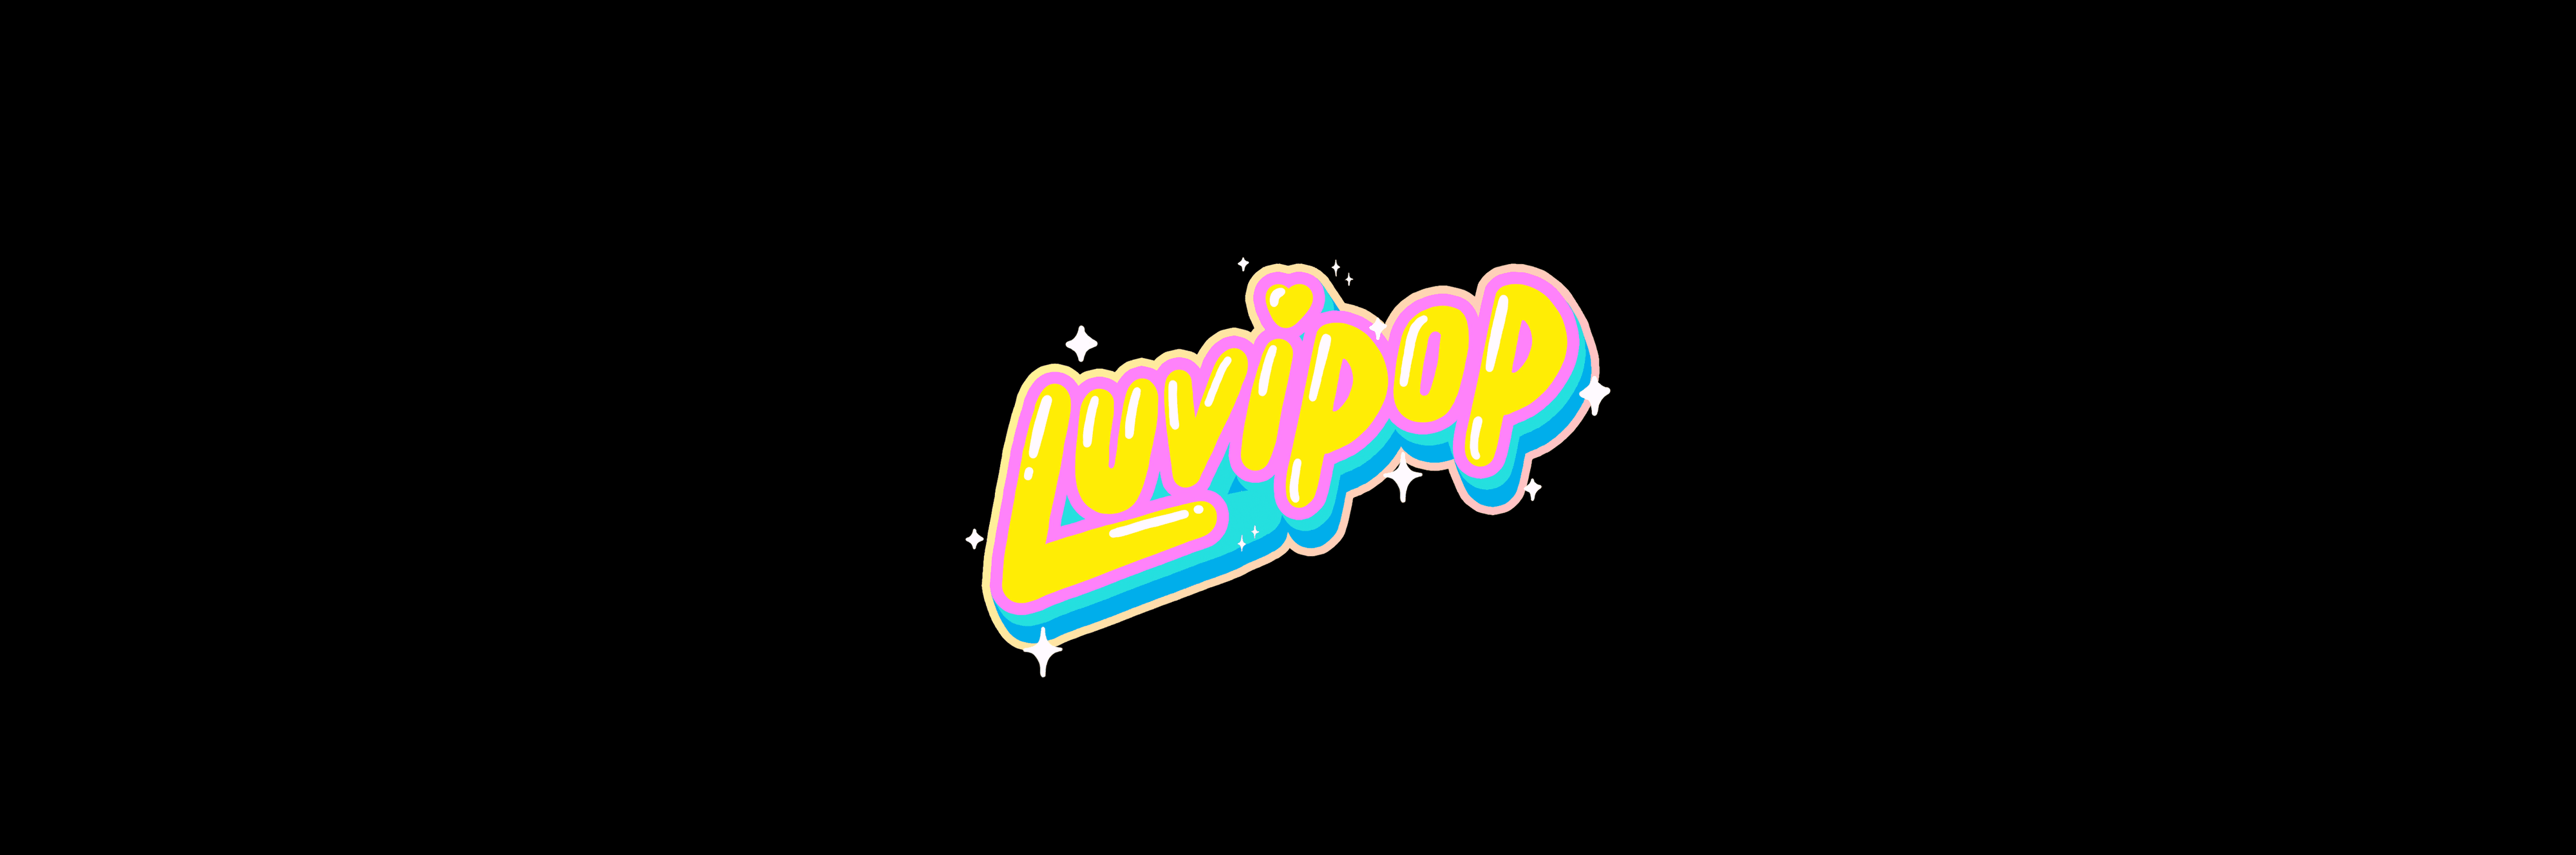 Luvipop banner